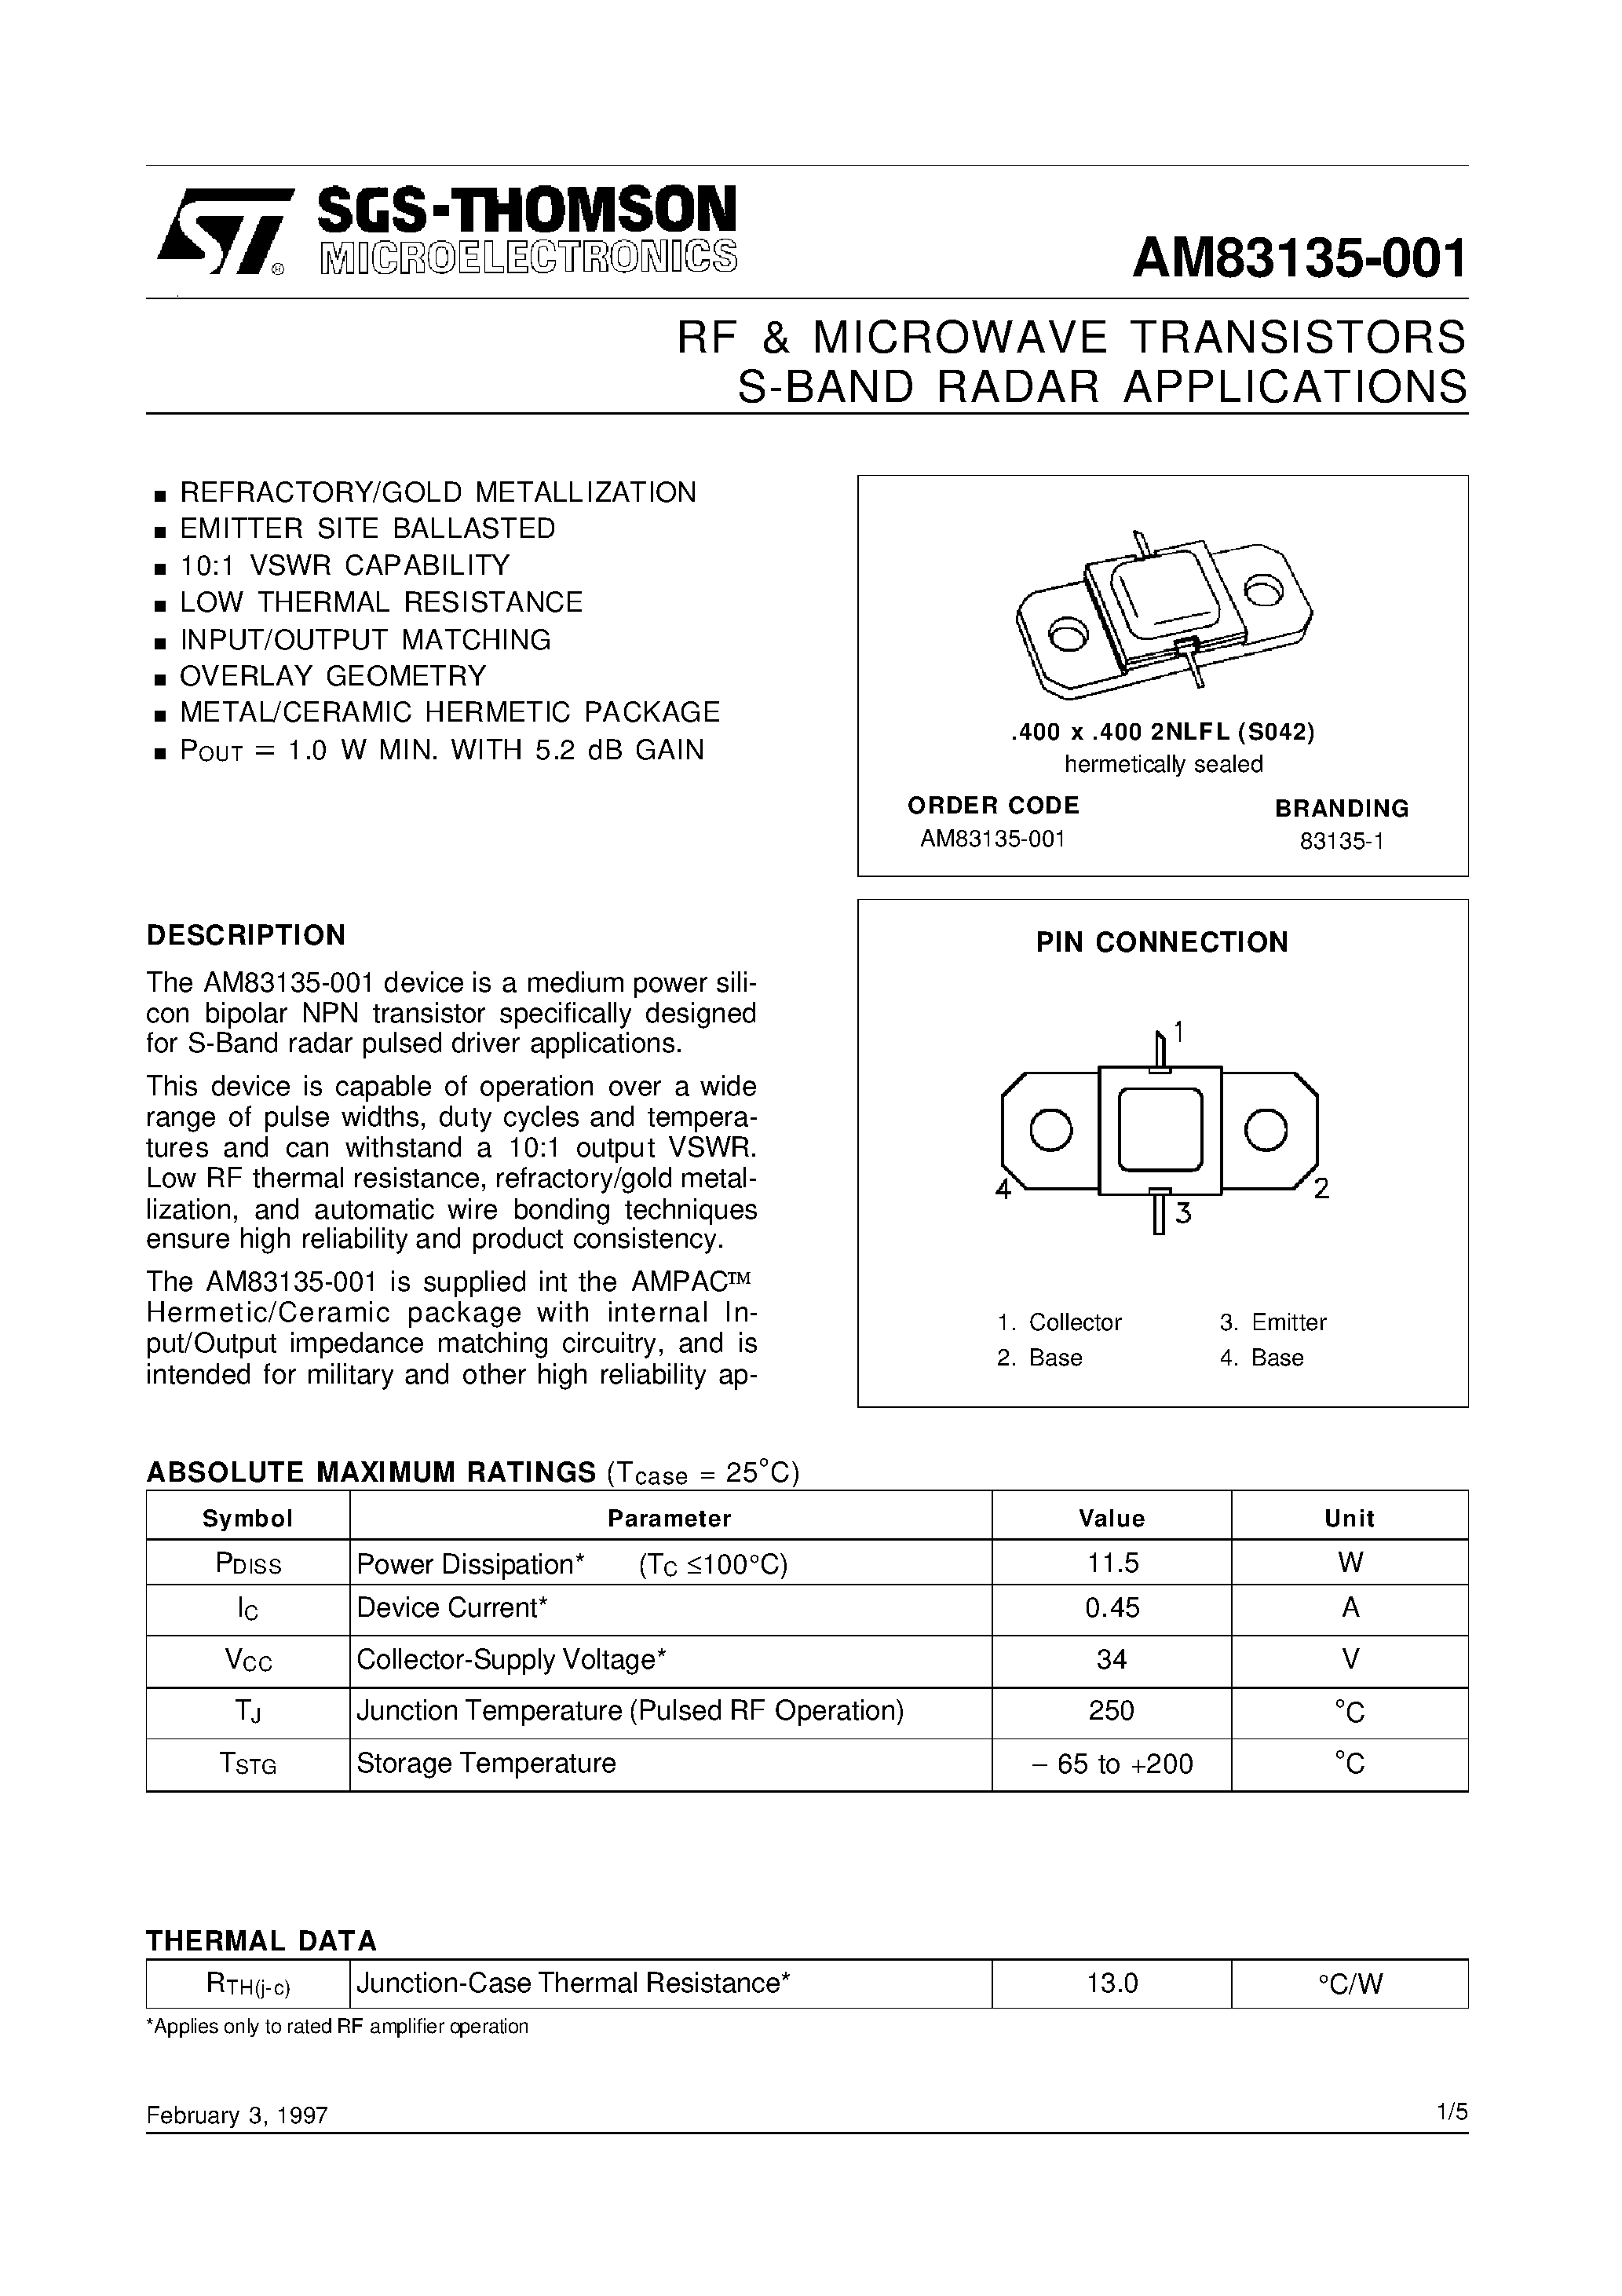 Datasheet AM83135-001 - RF & MICROWAVE TRANSISTORS S-BAND RADAR APPLICATIONS page 1